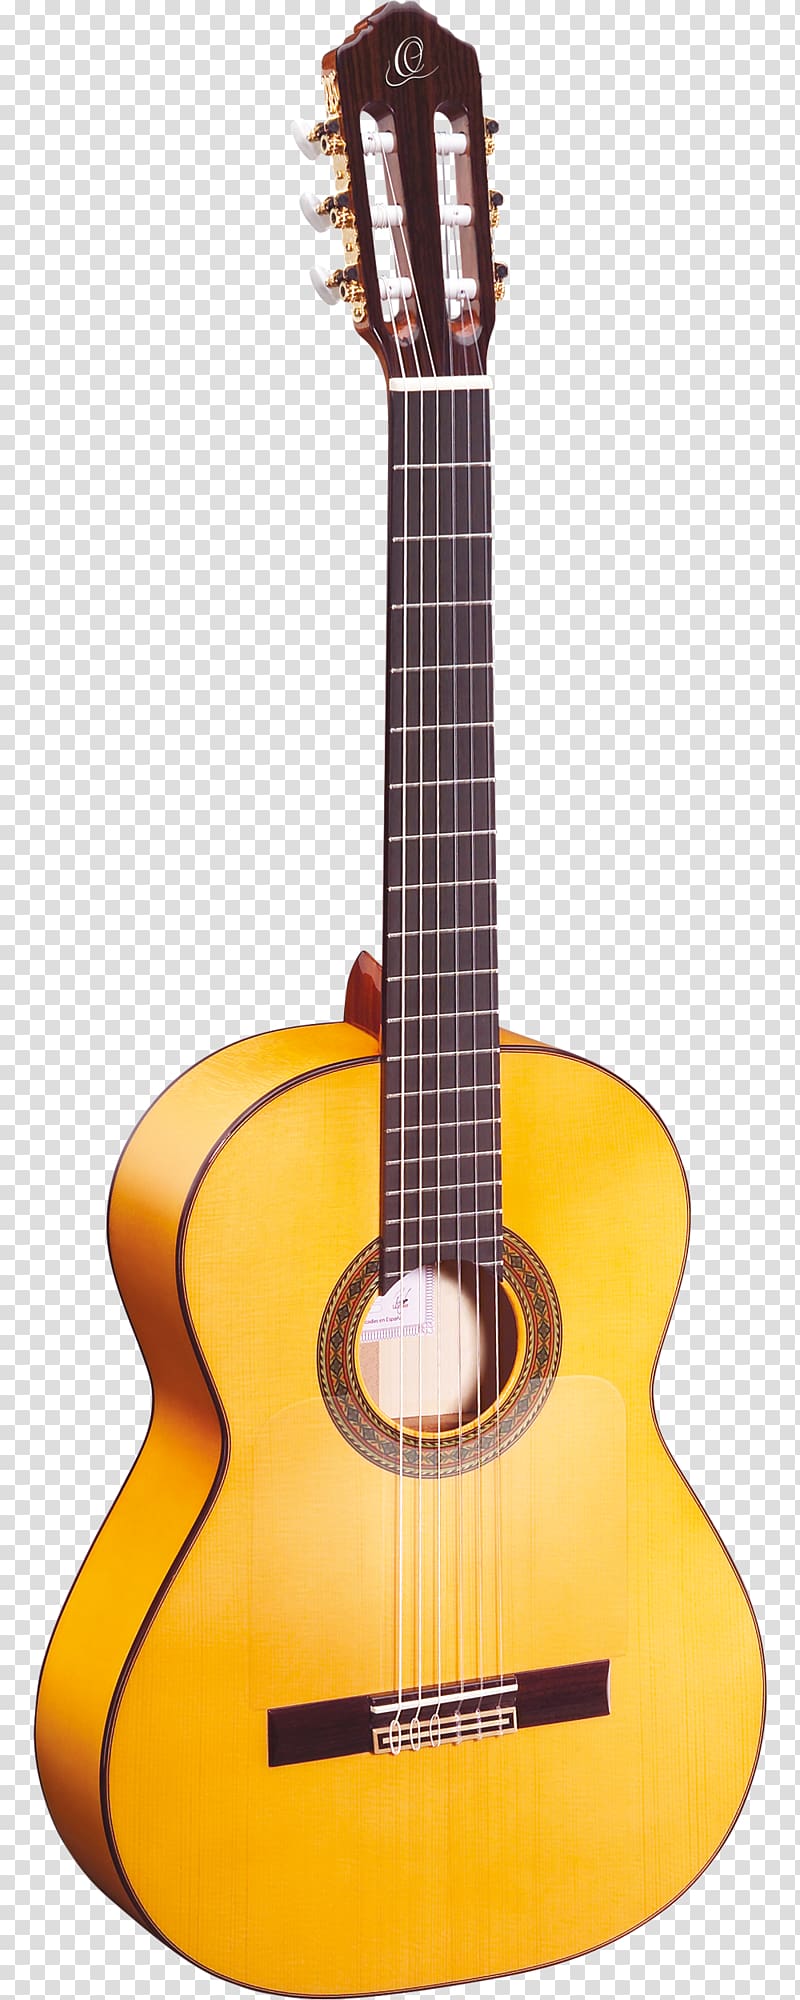 Classical musical instruments . Clipart guitar flamenco guitar